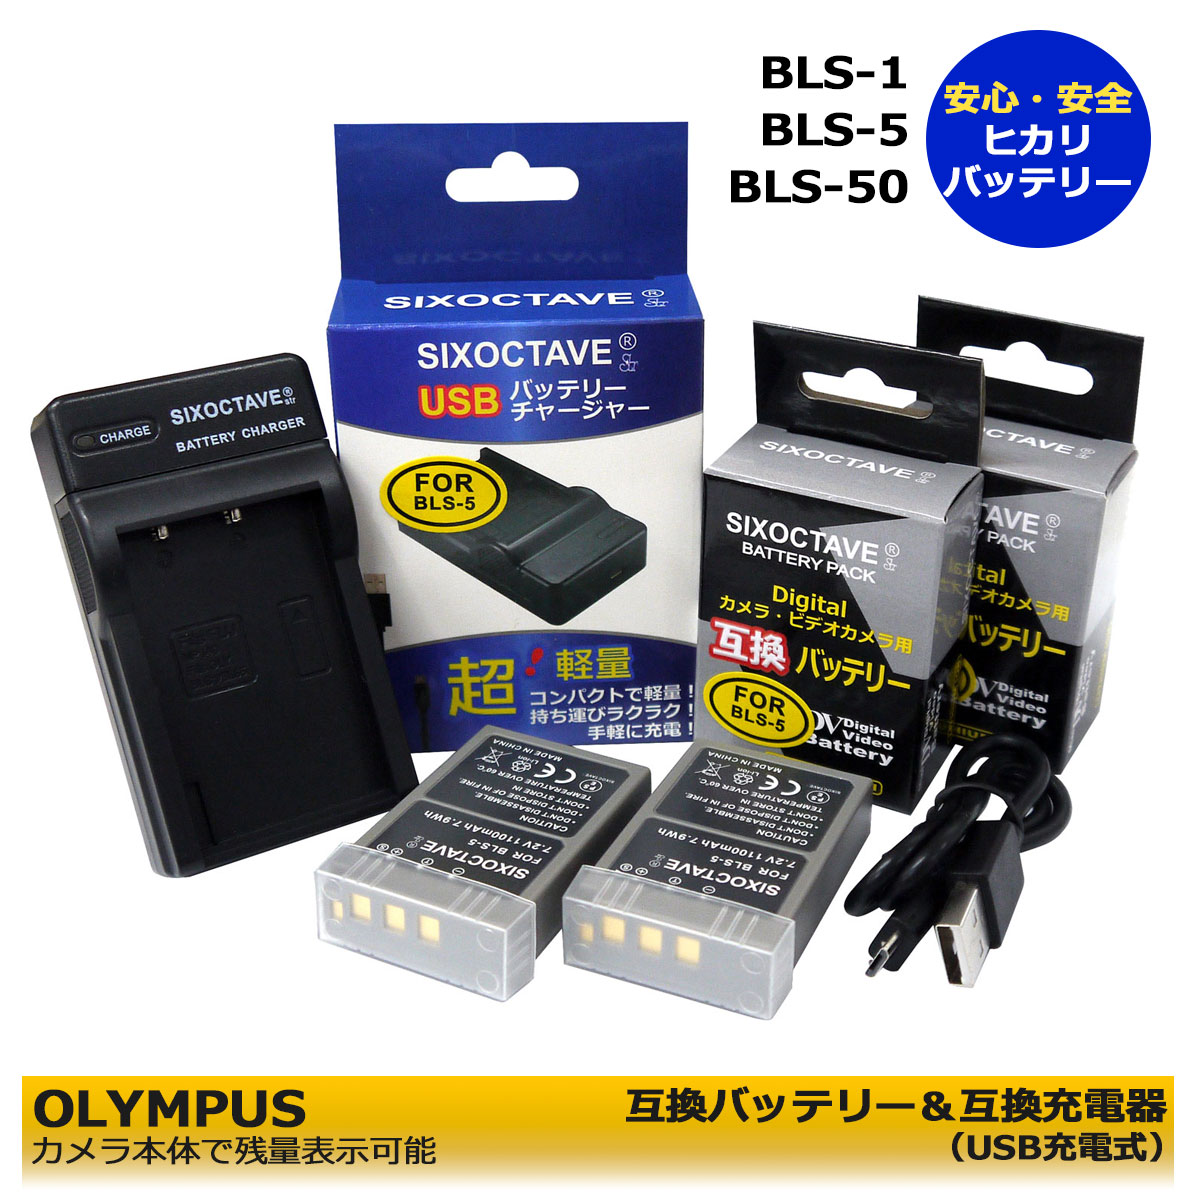 BLS-5 【あす楽対応】 OLYMPUS BLS-5 / 